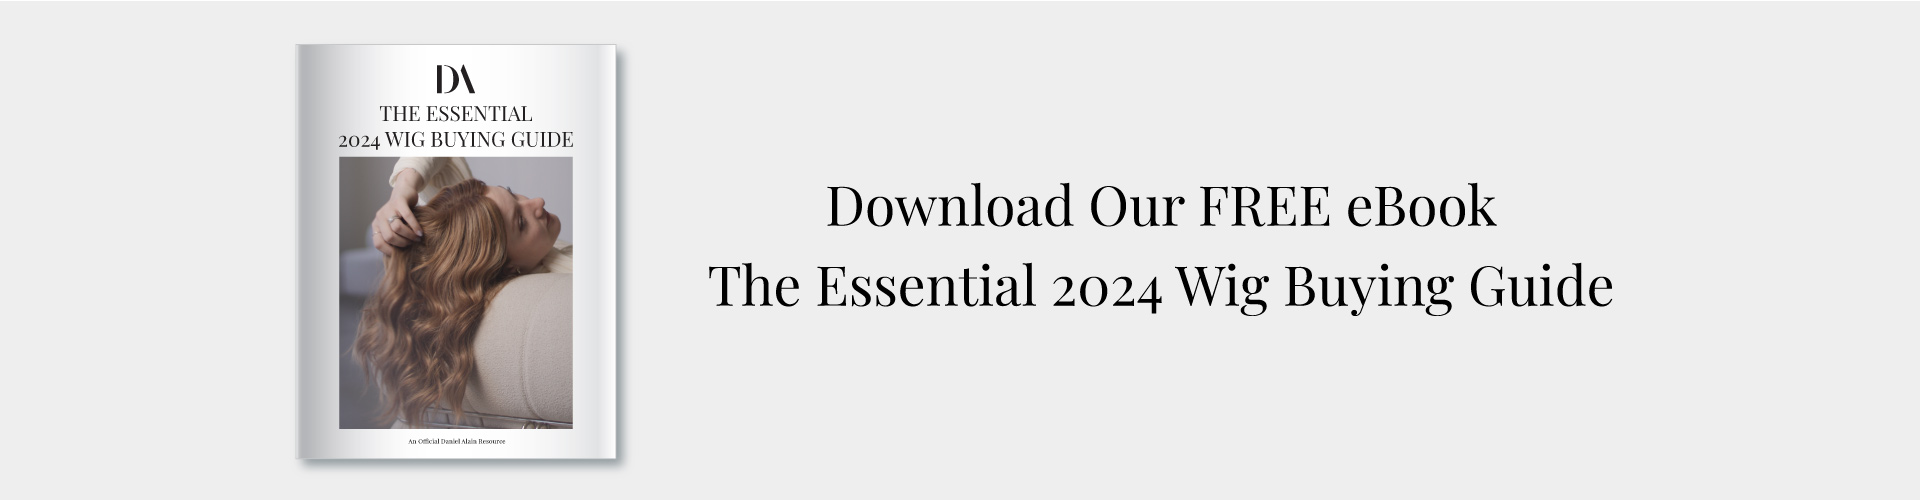 ebook-2024-wig-buying-guide-desktop-banner-1920px